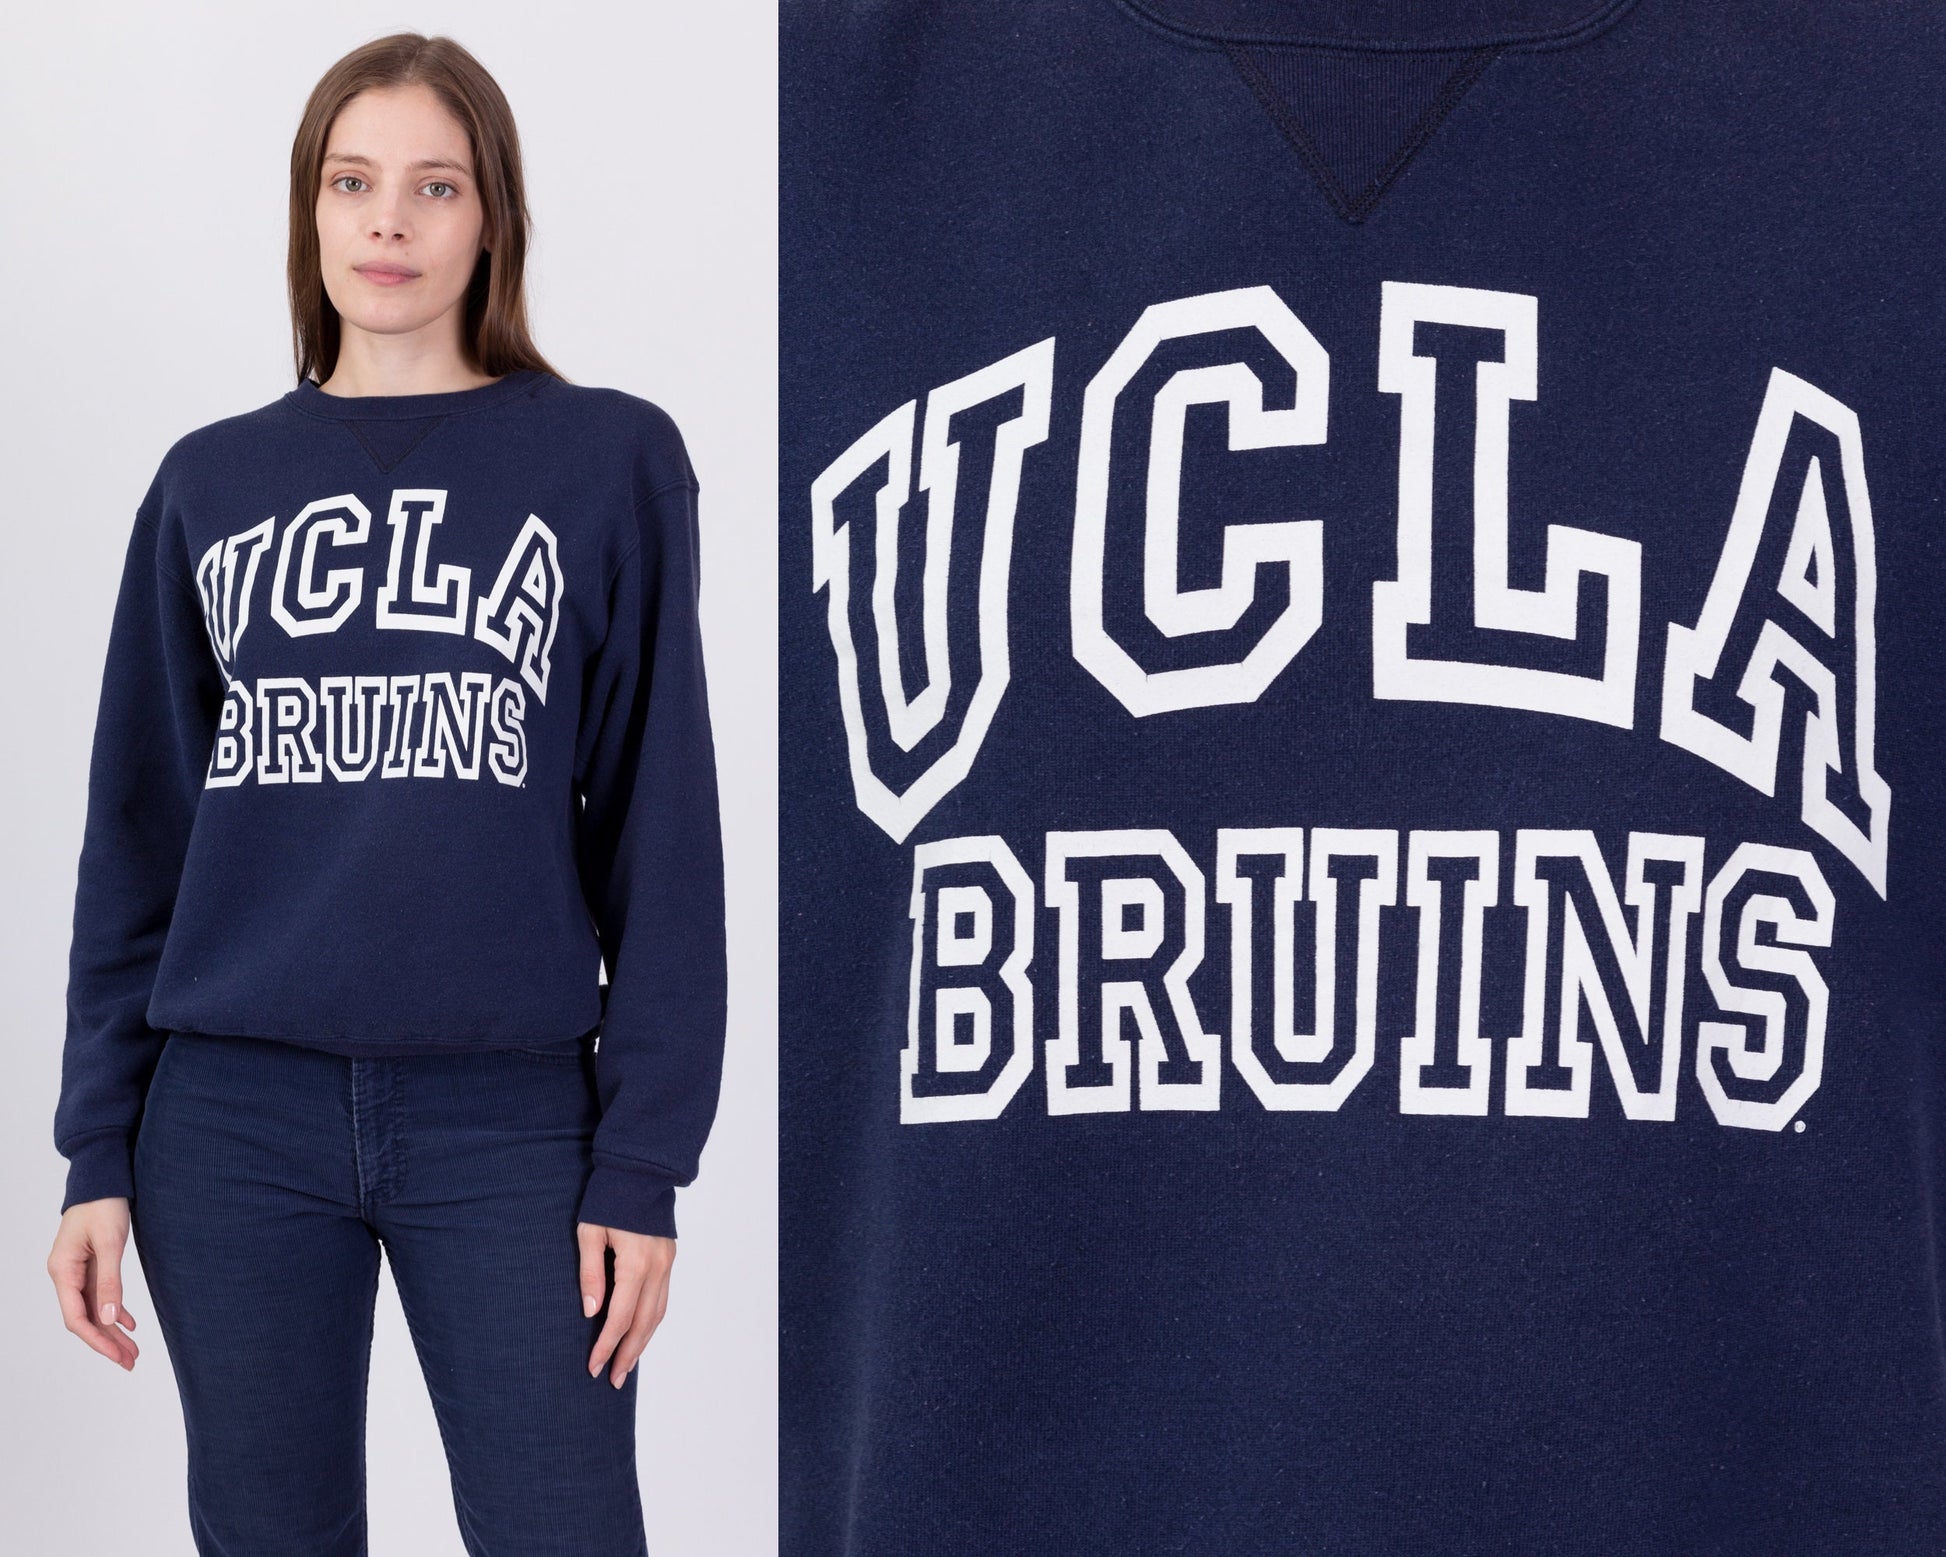 Bruins Crewneck Sweatshirts for Sale